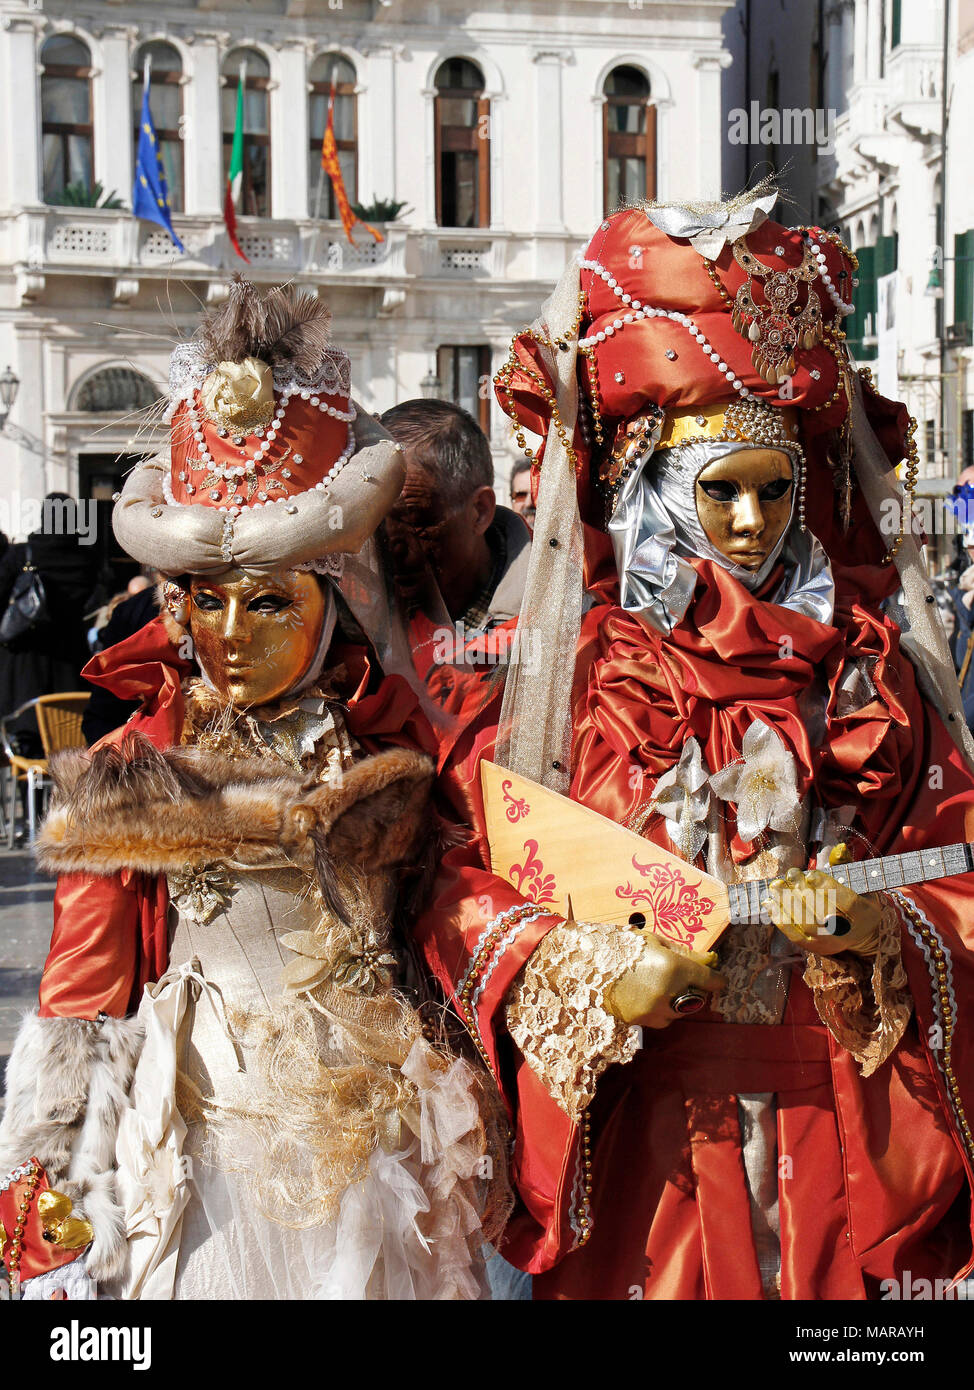 Carnival masks, St Marks Square, Venice, Italy Stock Photo